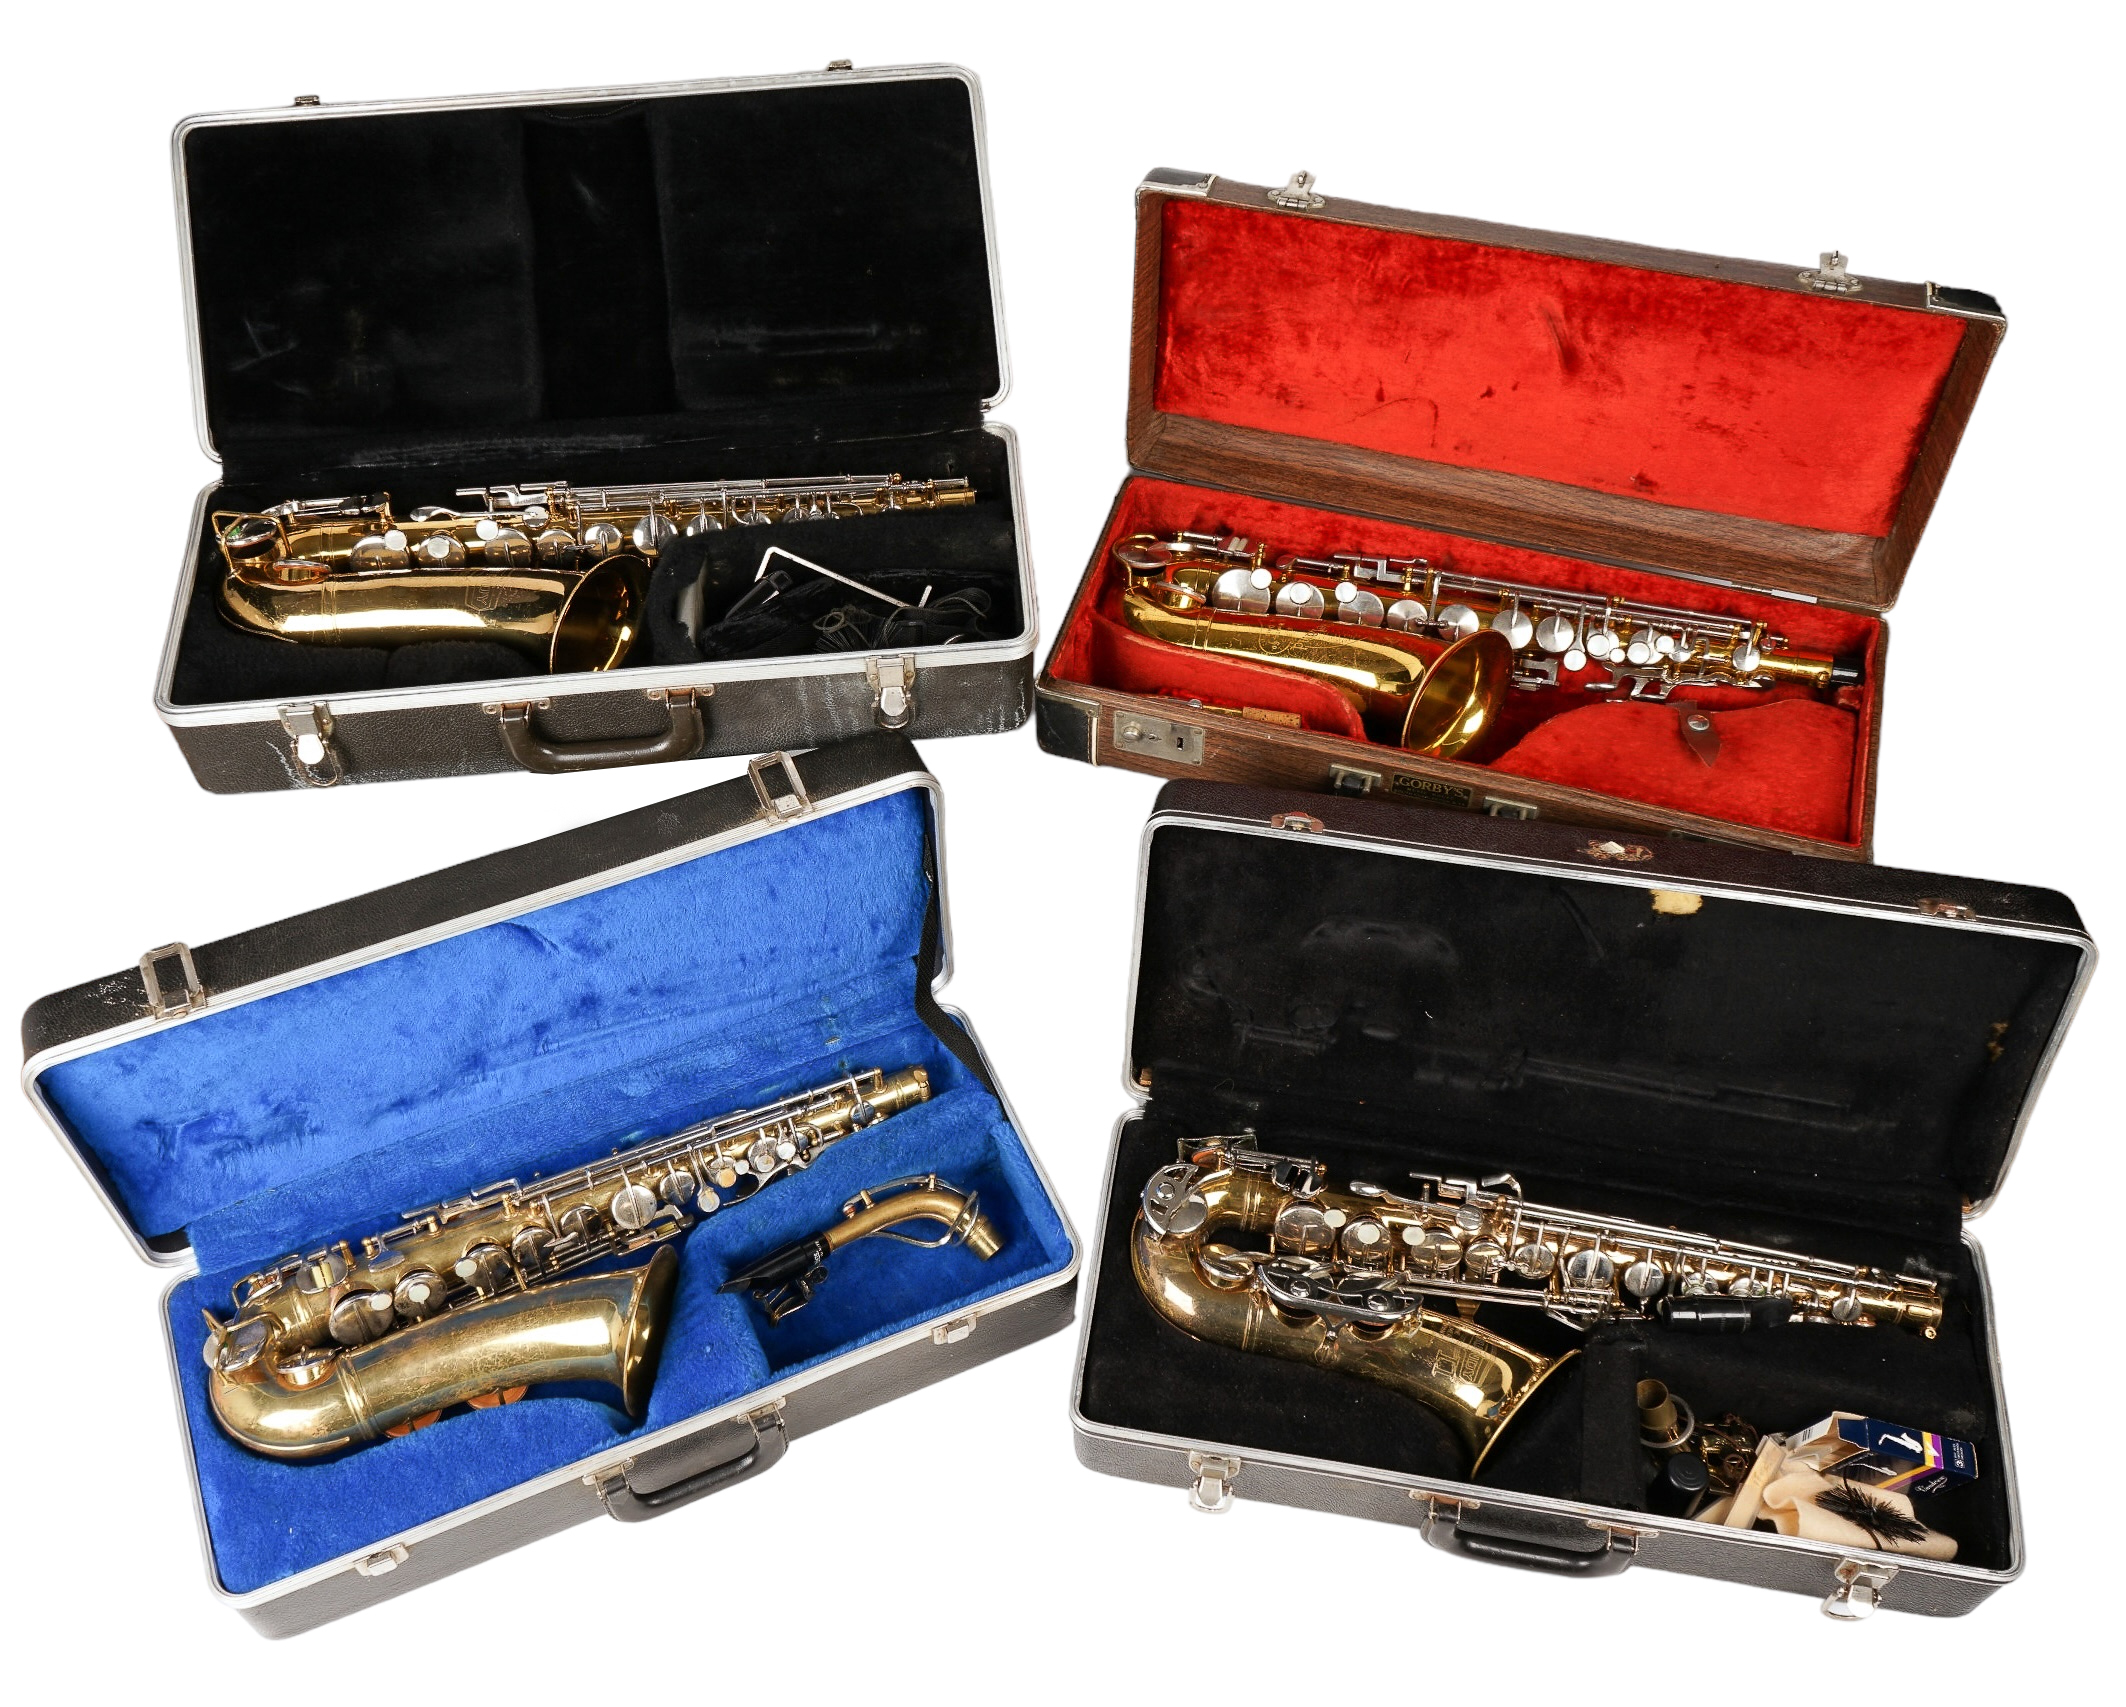 (4) Alto saxophones, c/o Bundy